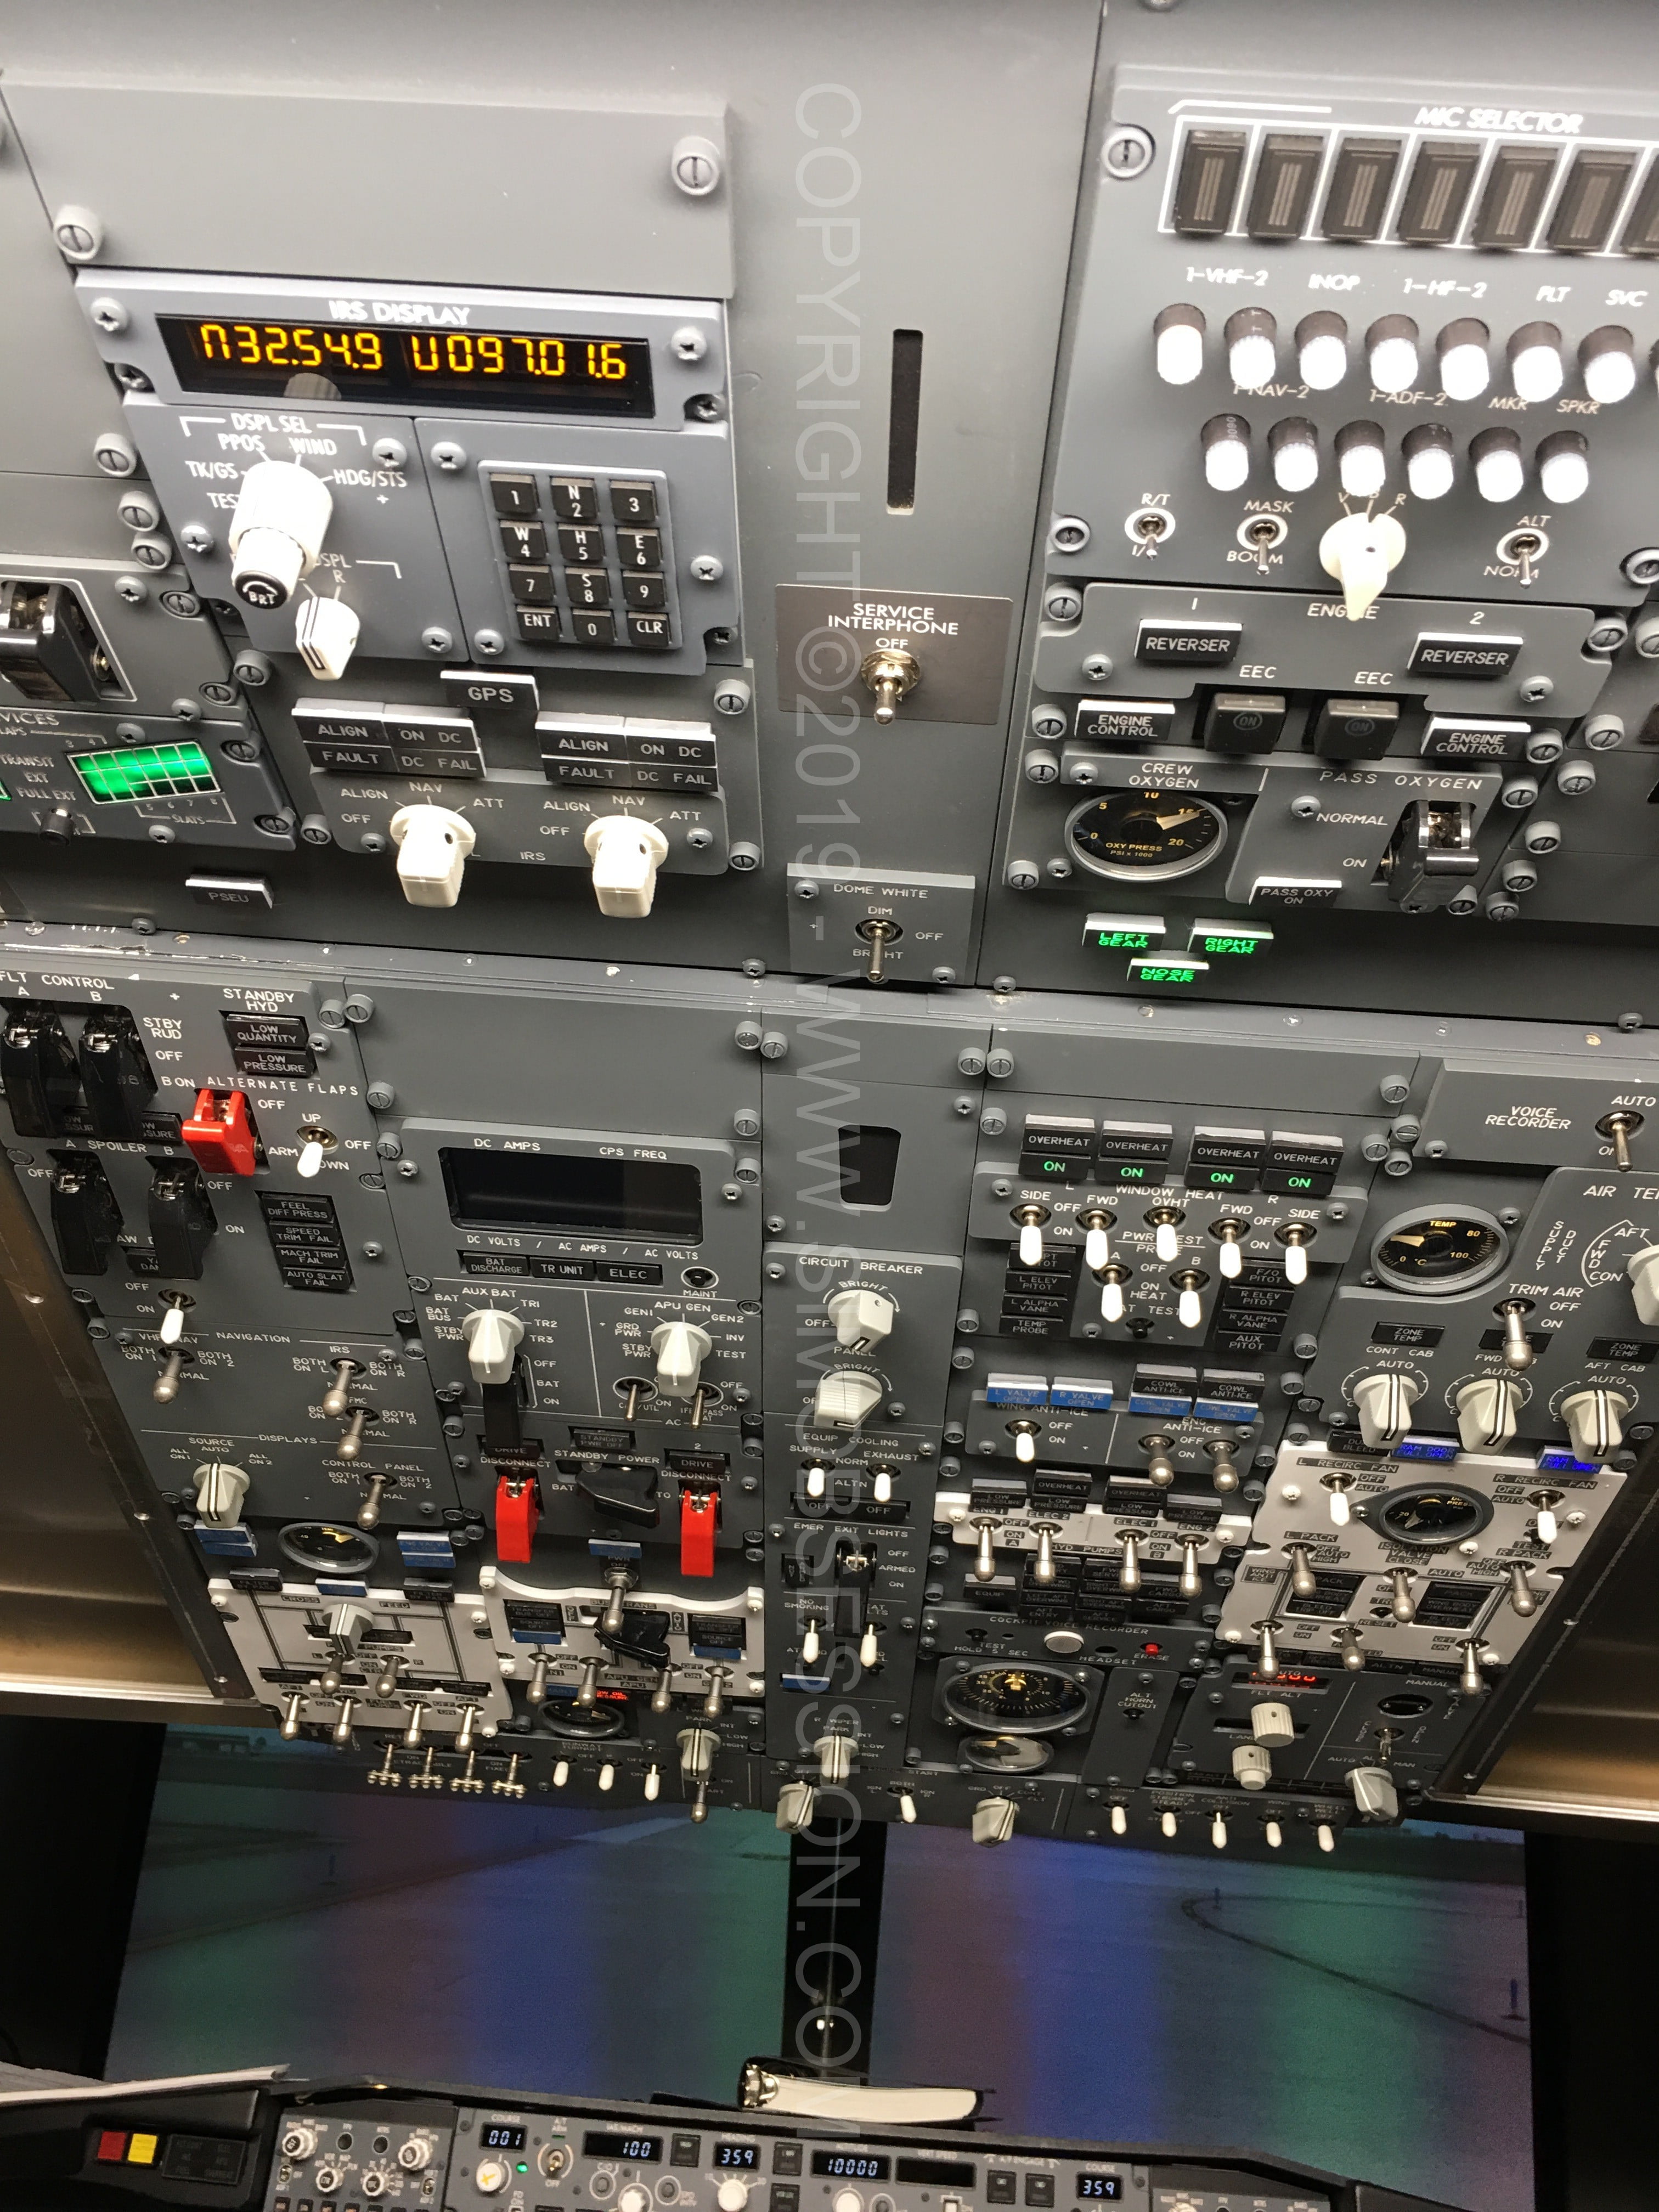 SimObsession - Home Built Boeing 737-800 Flight Simulator